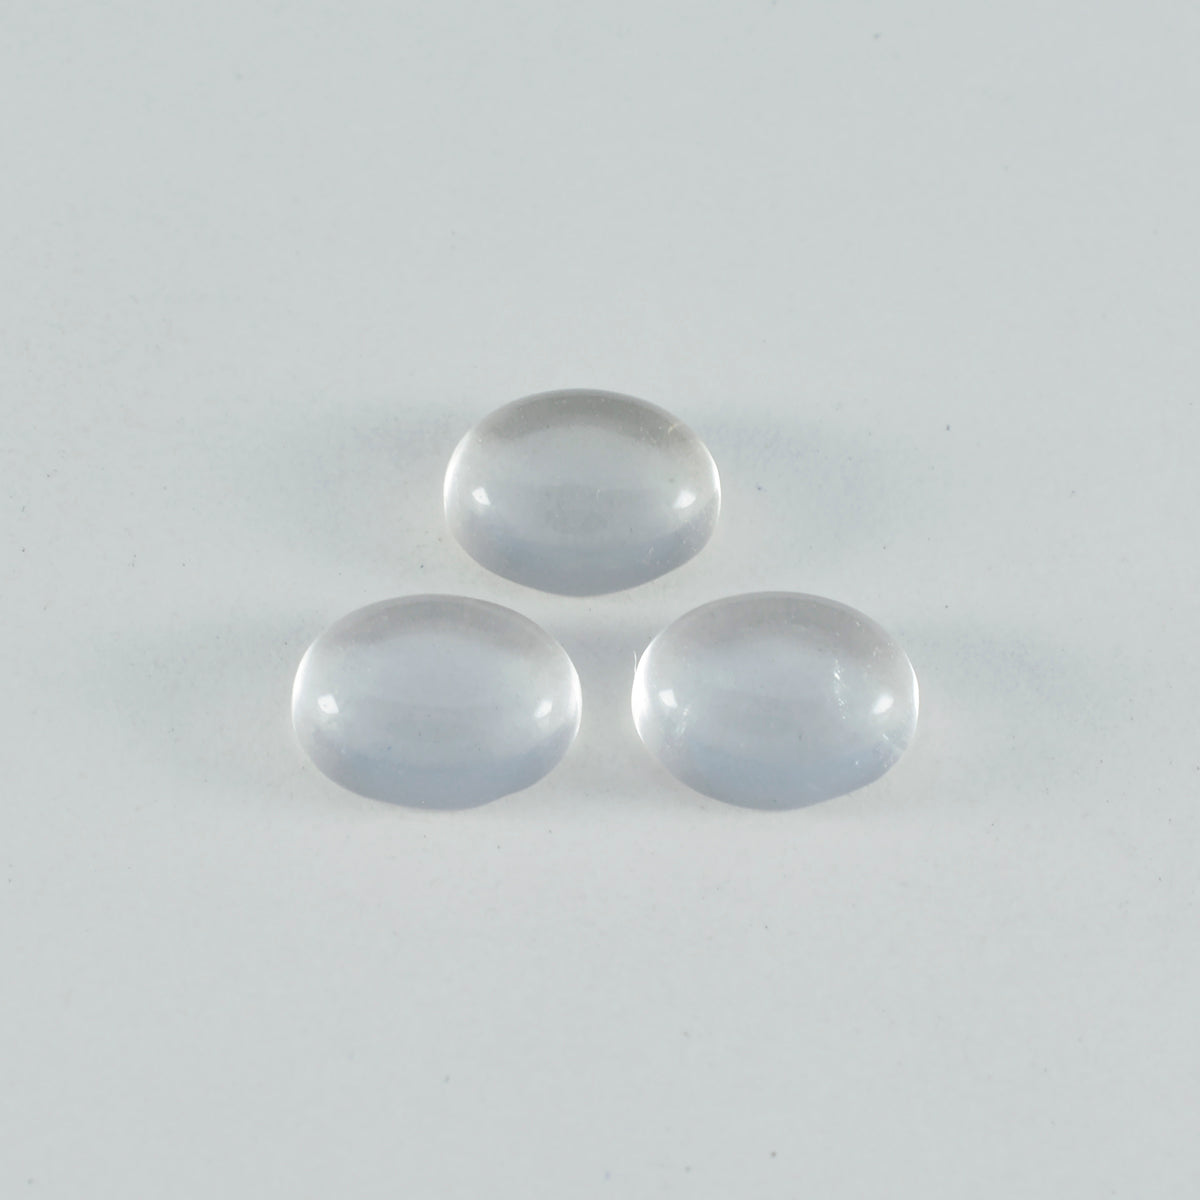 riyogems 1 st vit kristall kvarts cabochon 10x12 mm oval form fantastisk kvalitet ädelsten